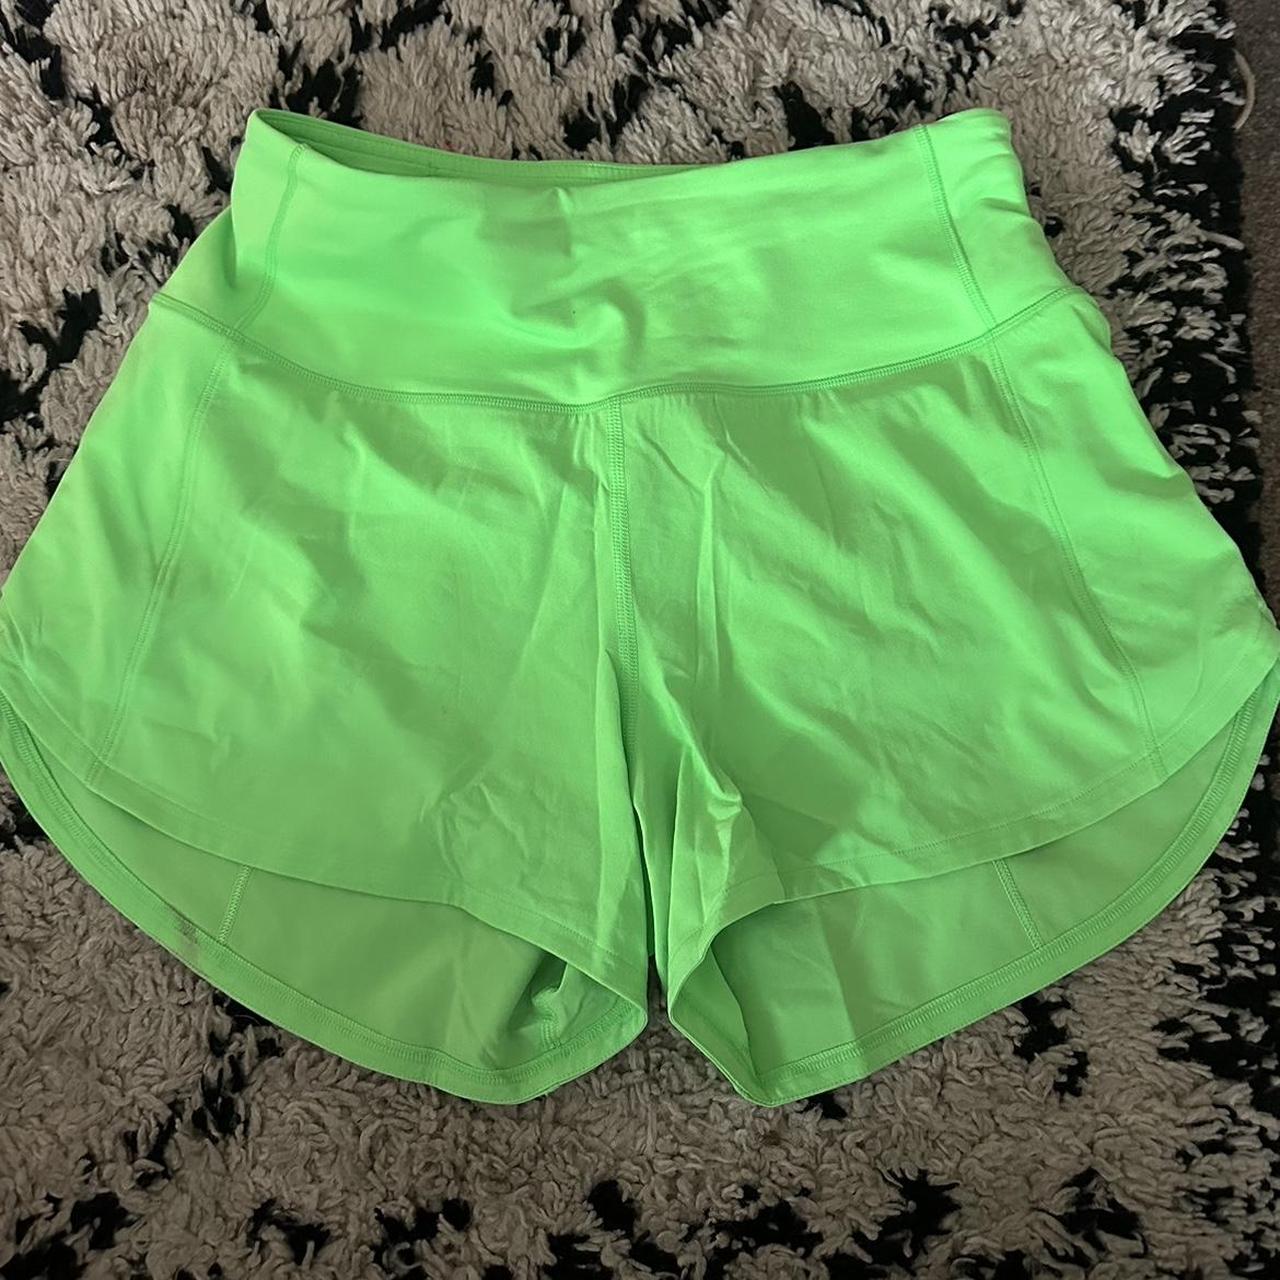 Lululemon green shorts Worn once - small mark on... - Depop